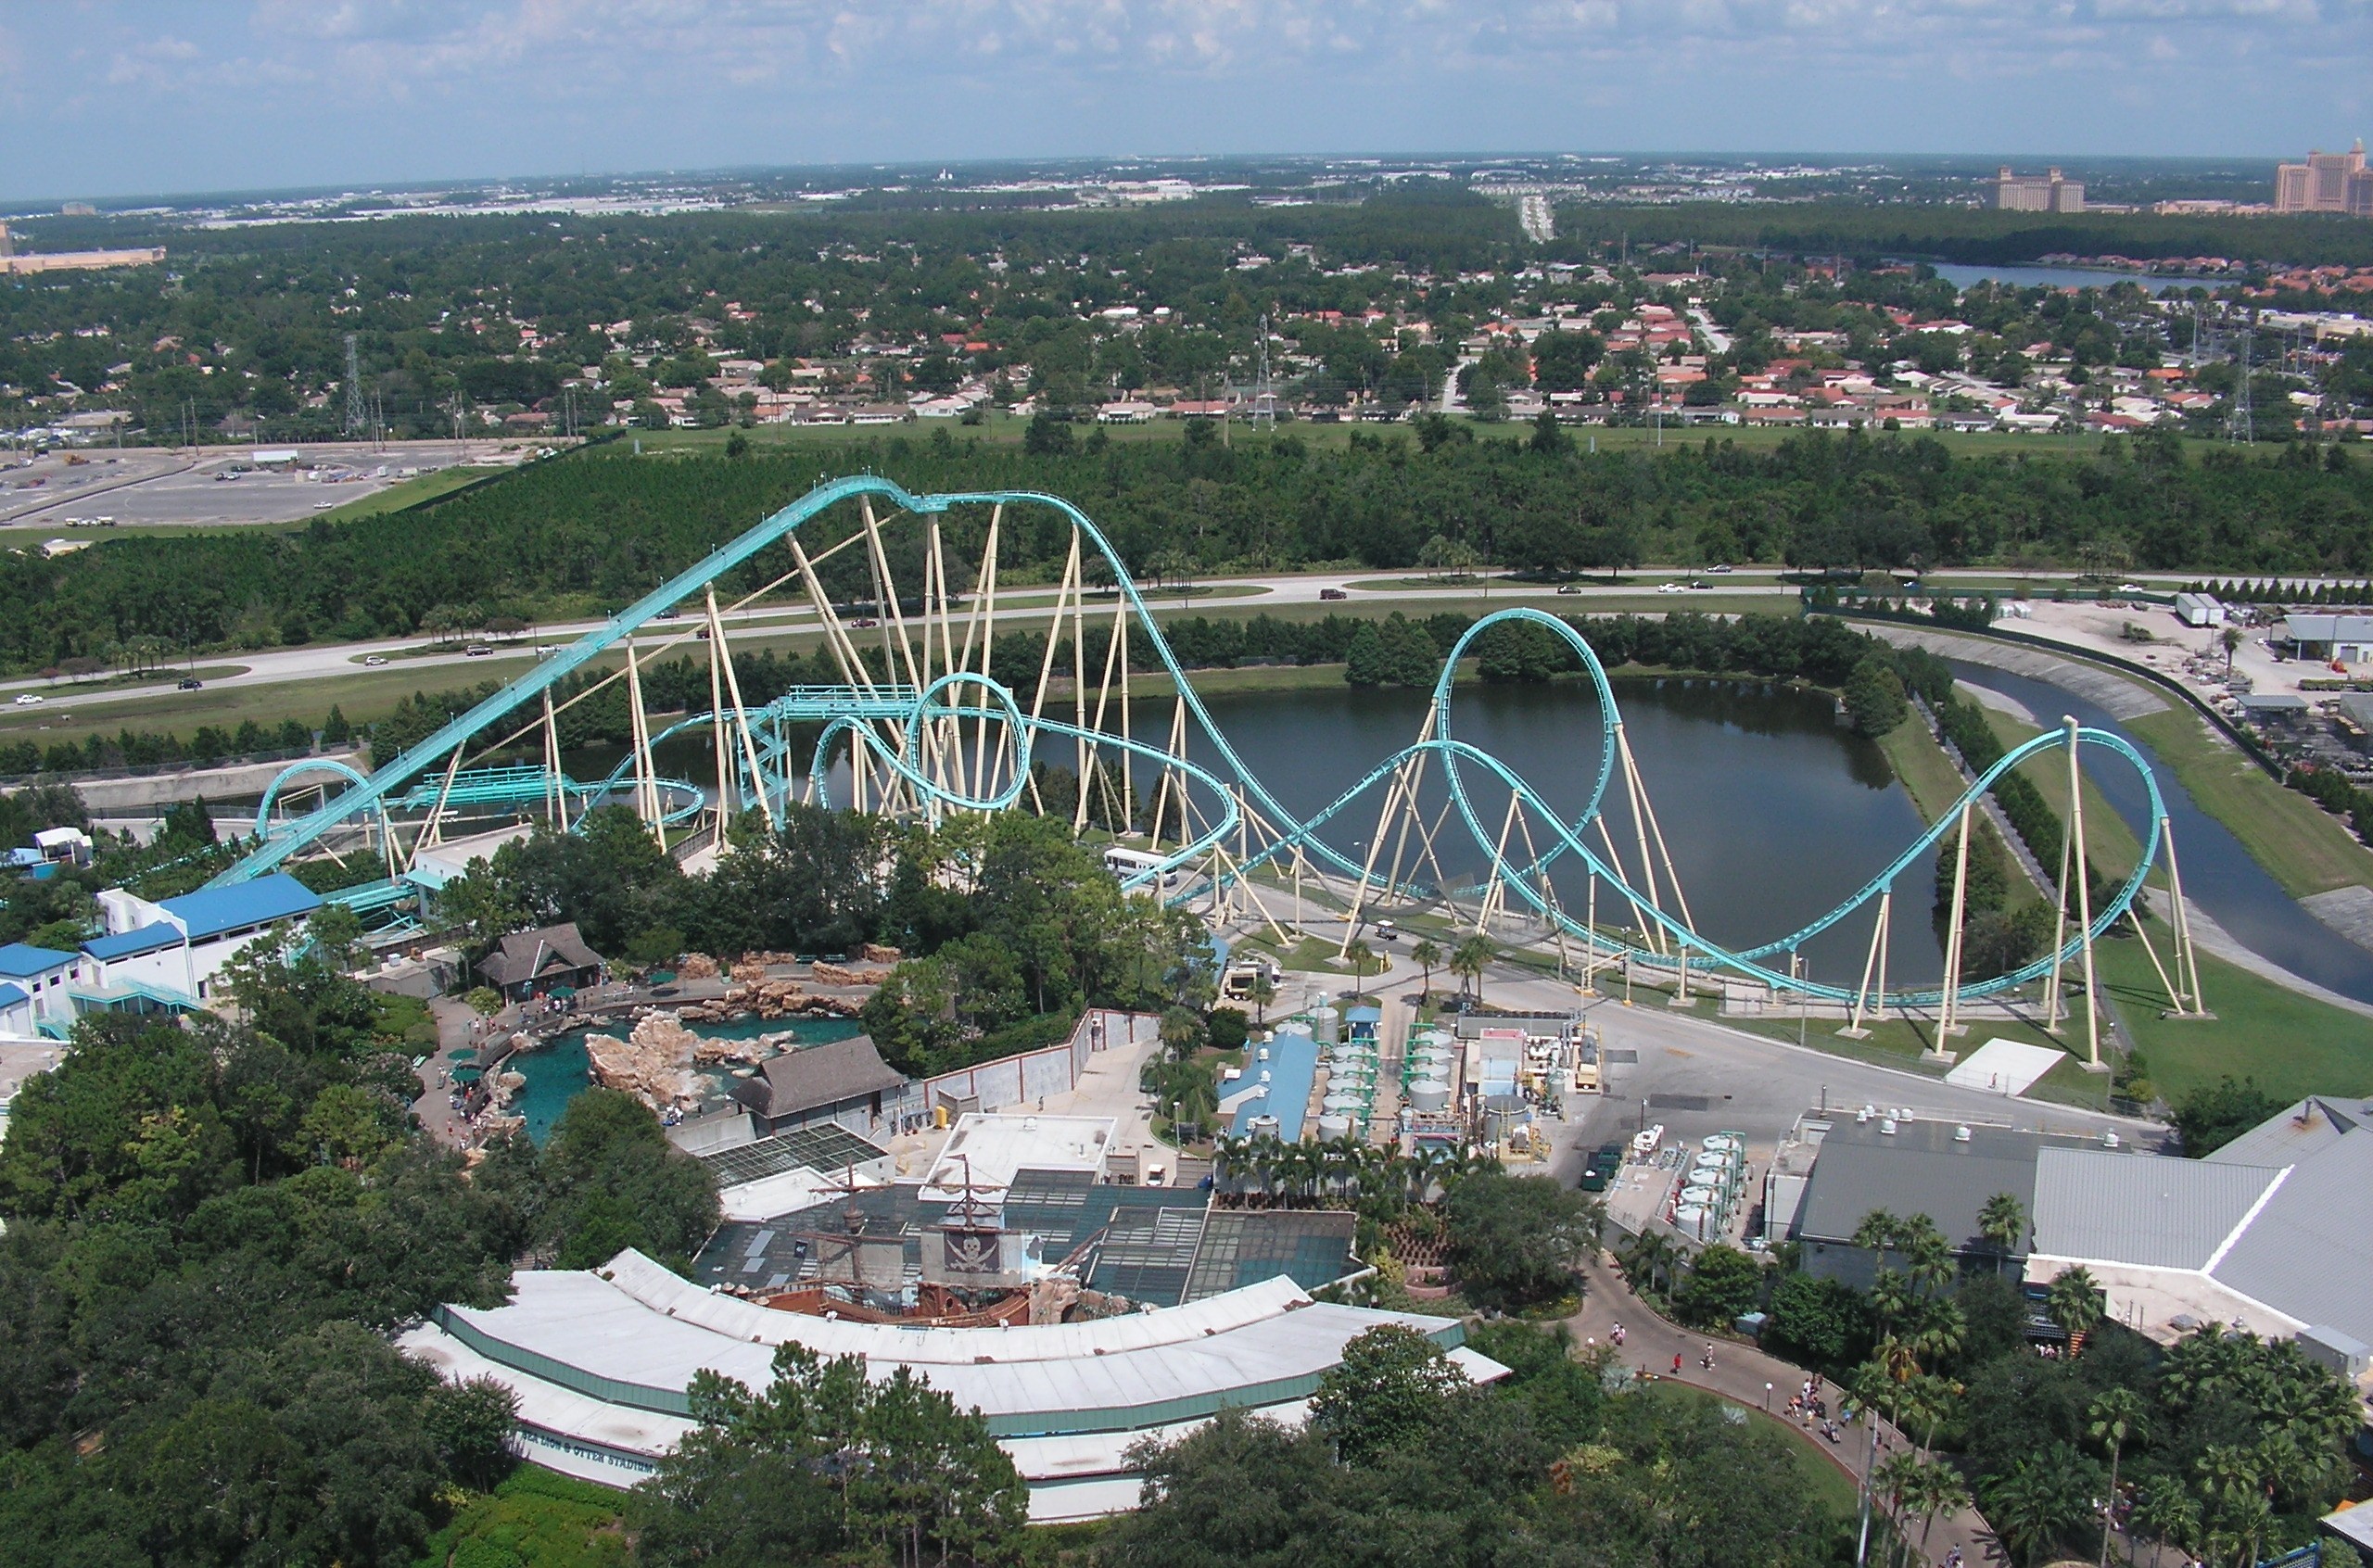 Kraken® Roller Coaster - Orlando's Only Floorless Steel Coaster